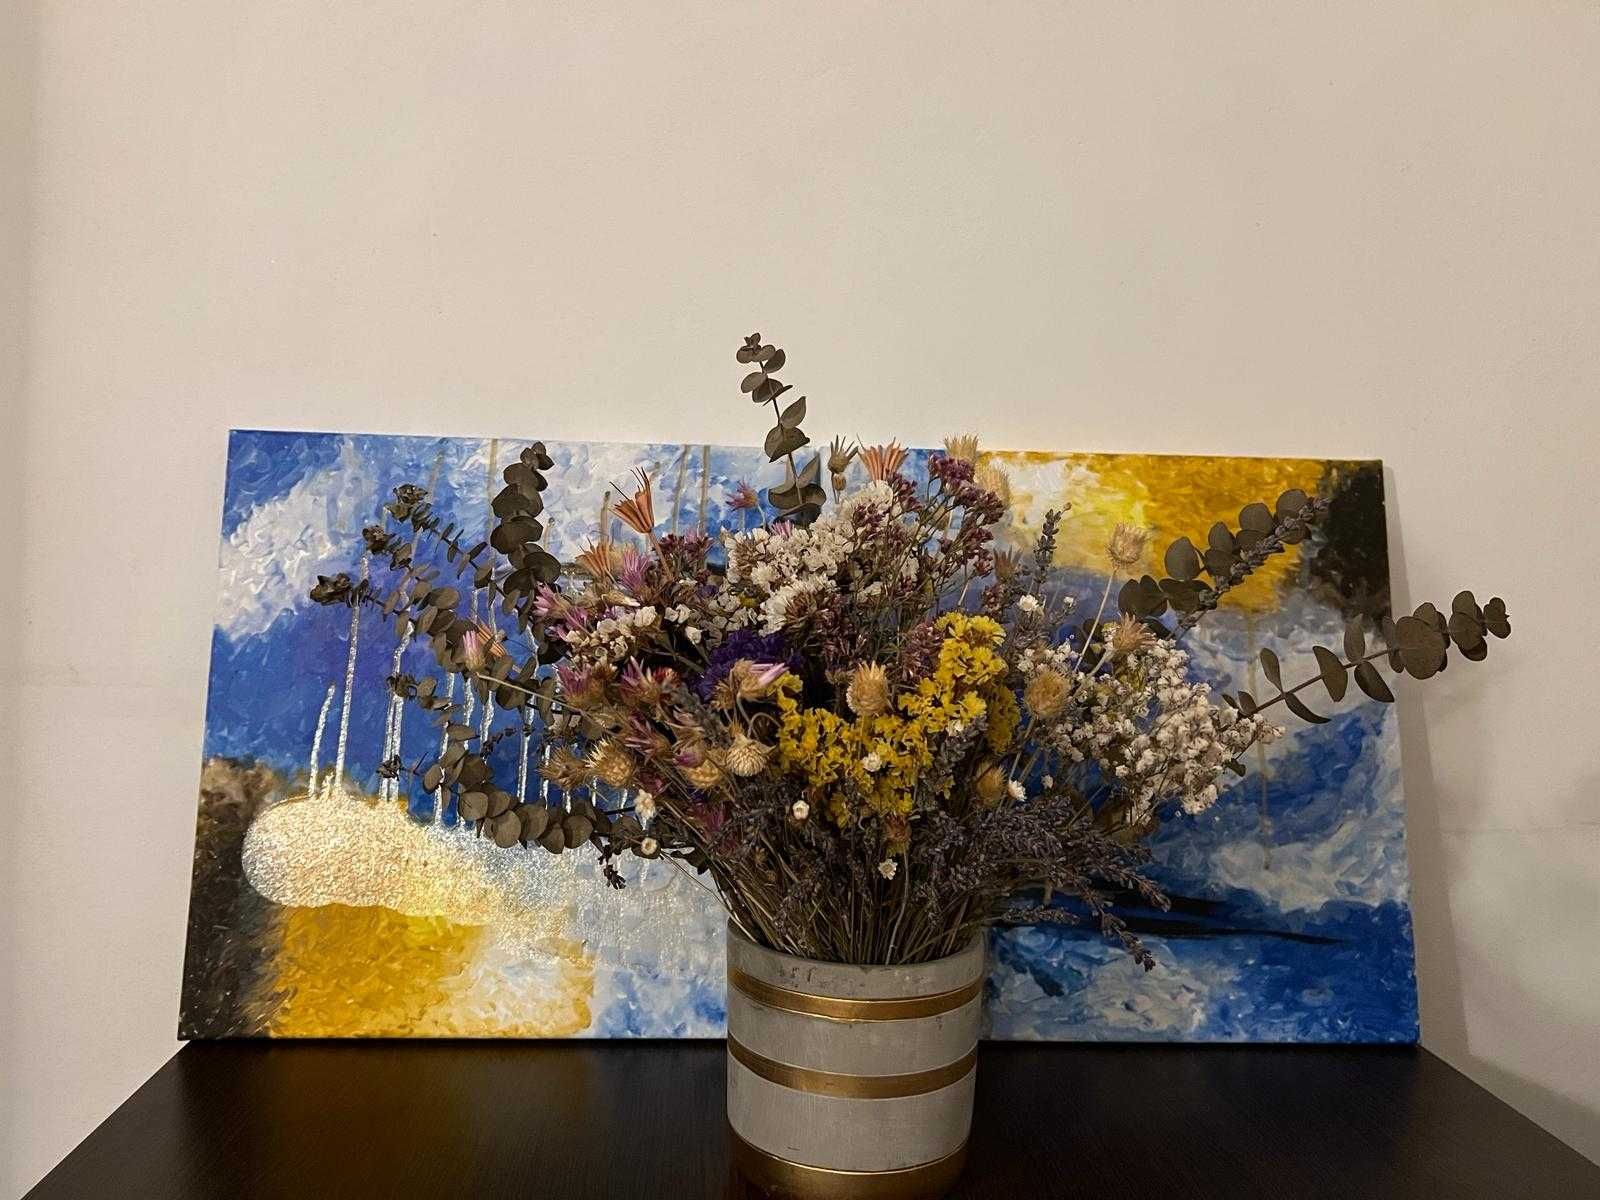 Tablou abstract pictat manual - vopsea acrilica -albastru-galben-auriu